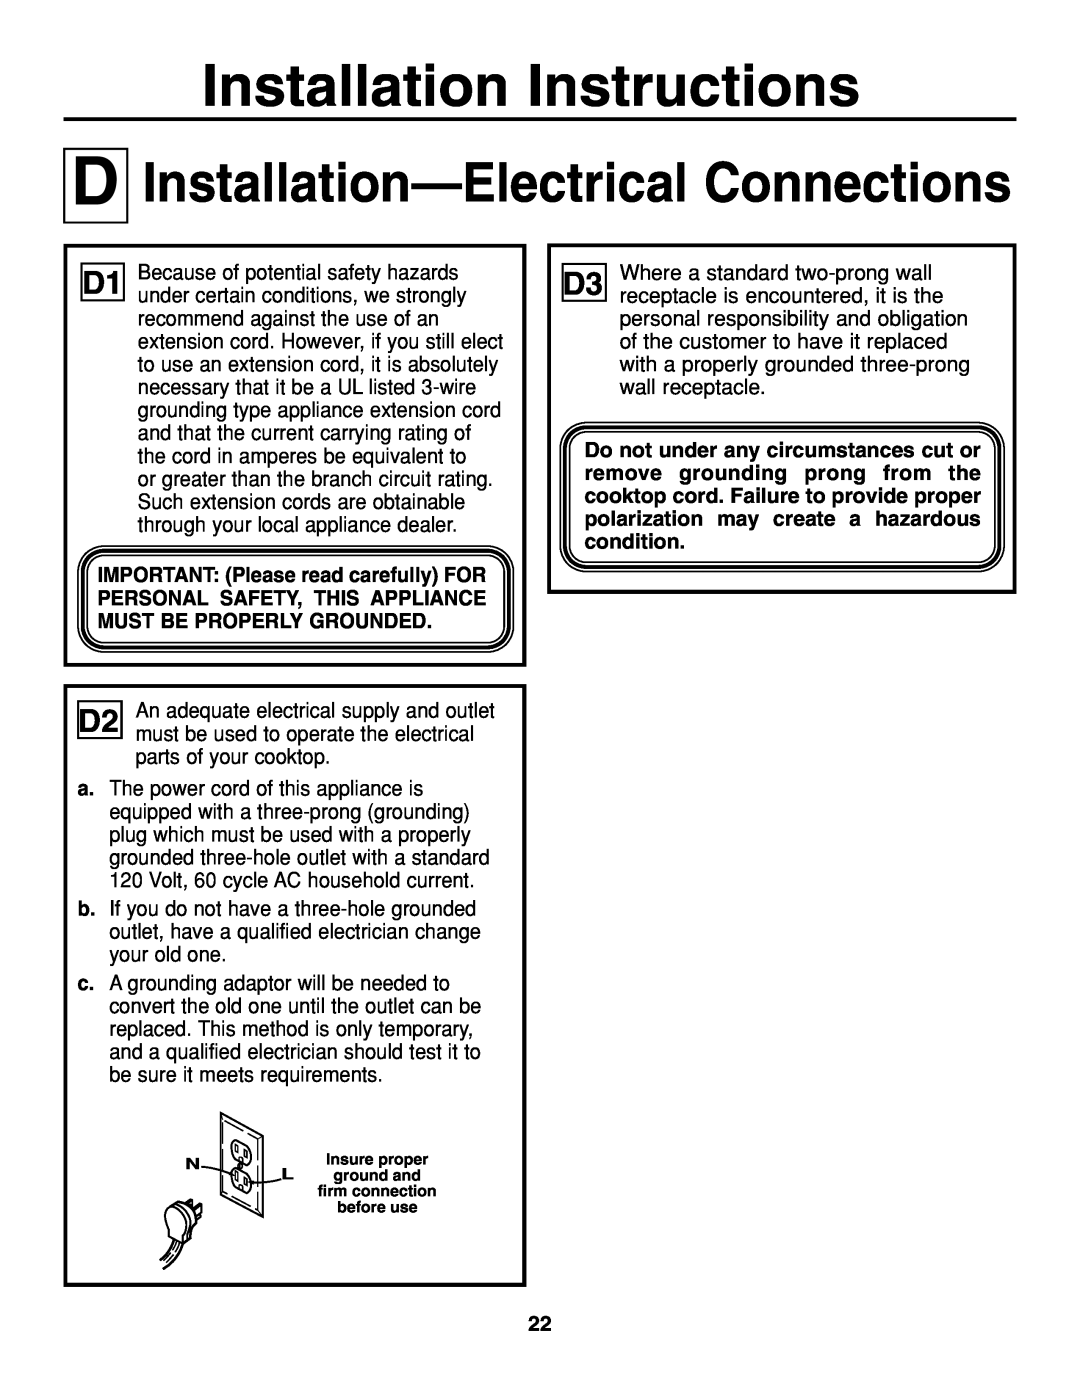 GE JGP337 operating instructions Installation-Electrical Connections, Installation Instructions 